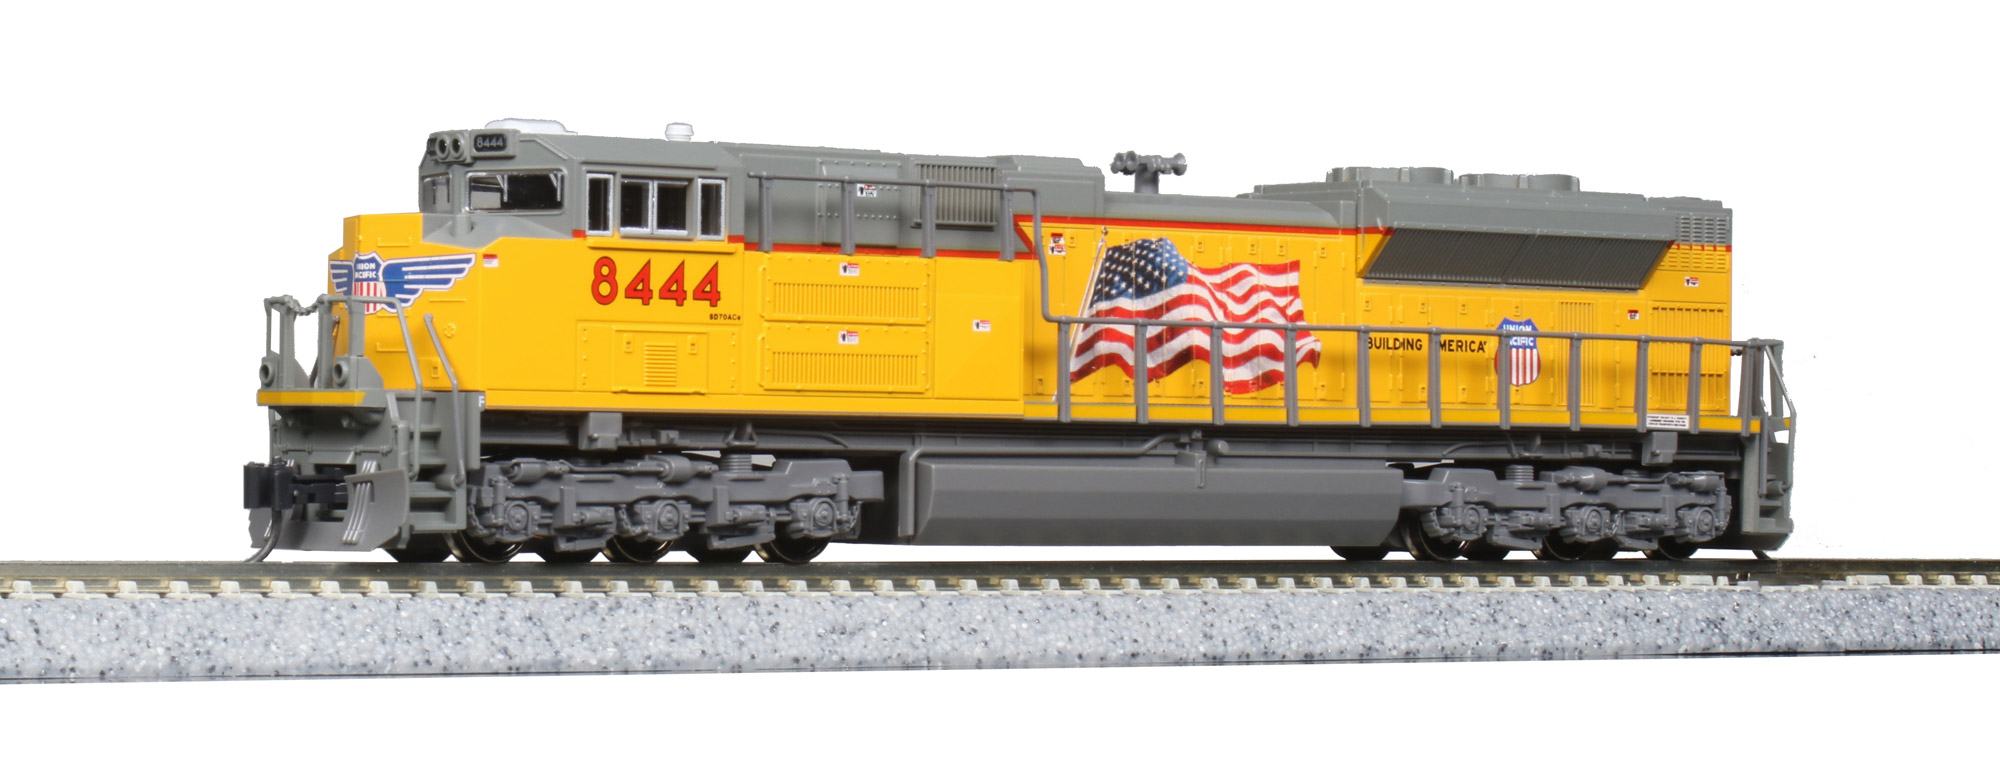 Kato N 176-8438-LS-DMW with DCC/ESU LokSound V5 EMD SD70ACe Diesel Locomotive Union Pacific 'Flag Scheme' UP #8497